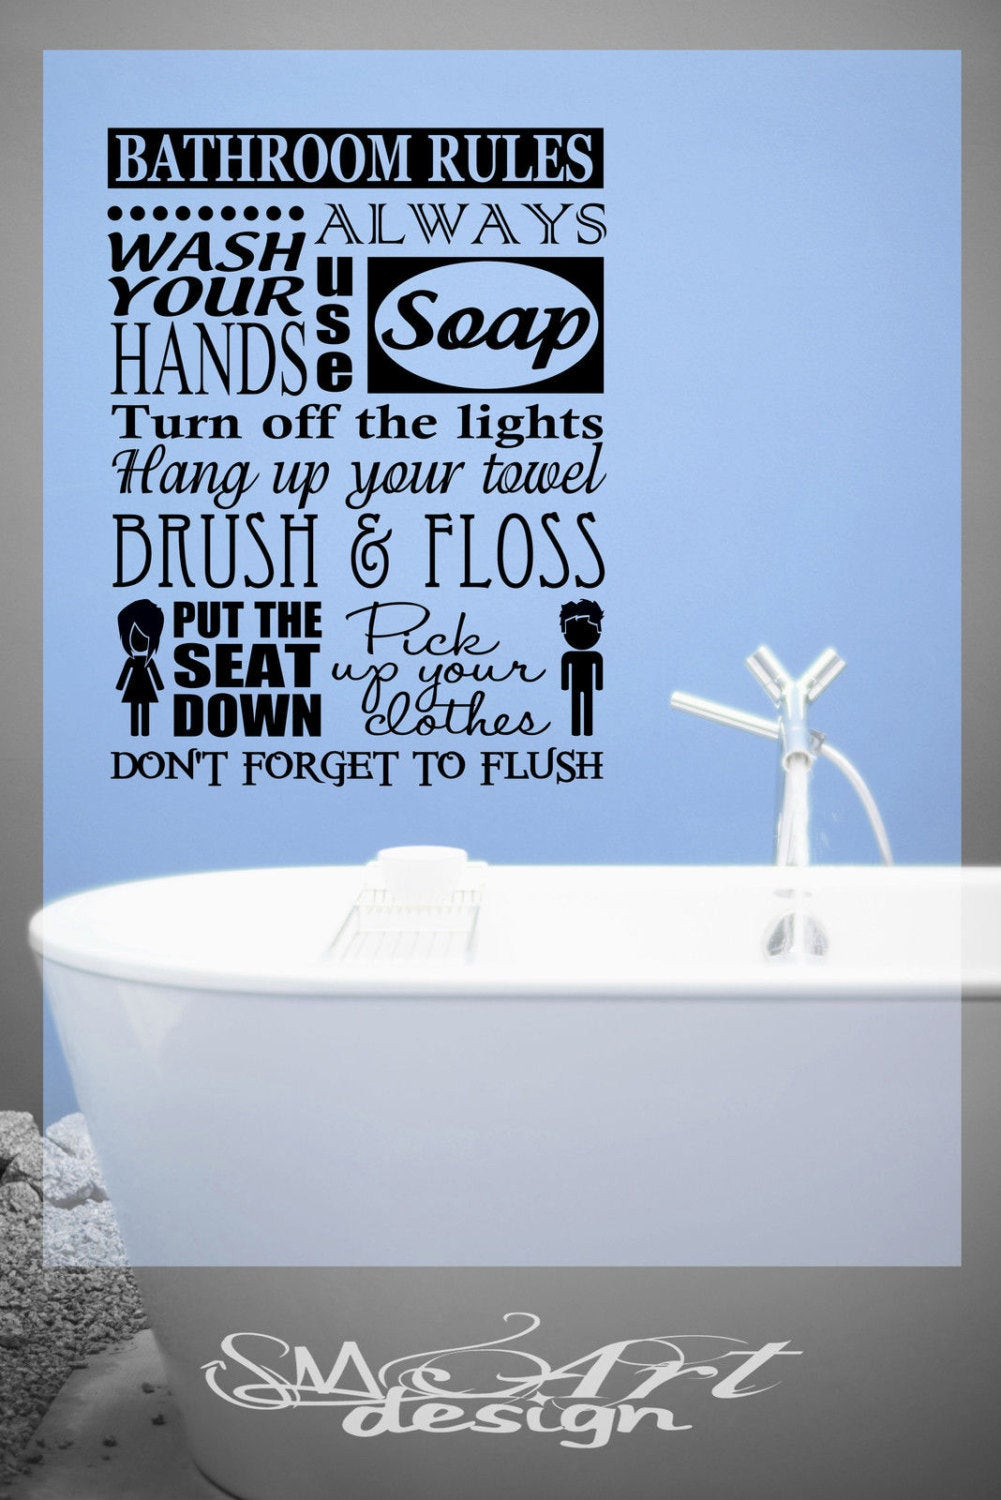 Bathroom Rules Wall Decals
 Bathroom rules Wall Decal Vinyl sticker home decor shower door